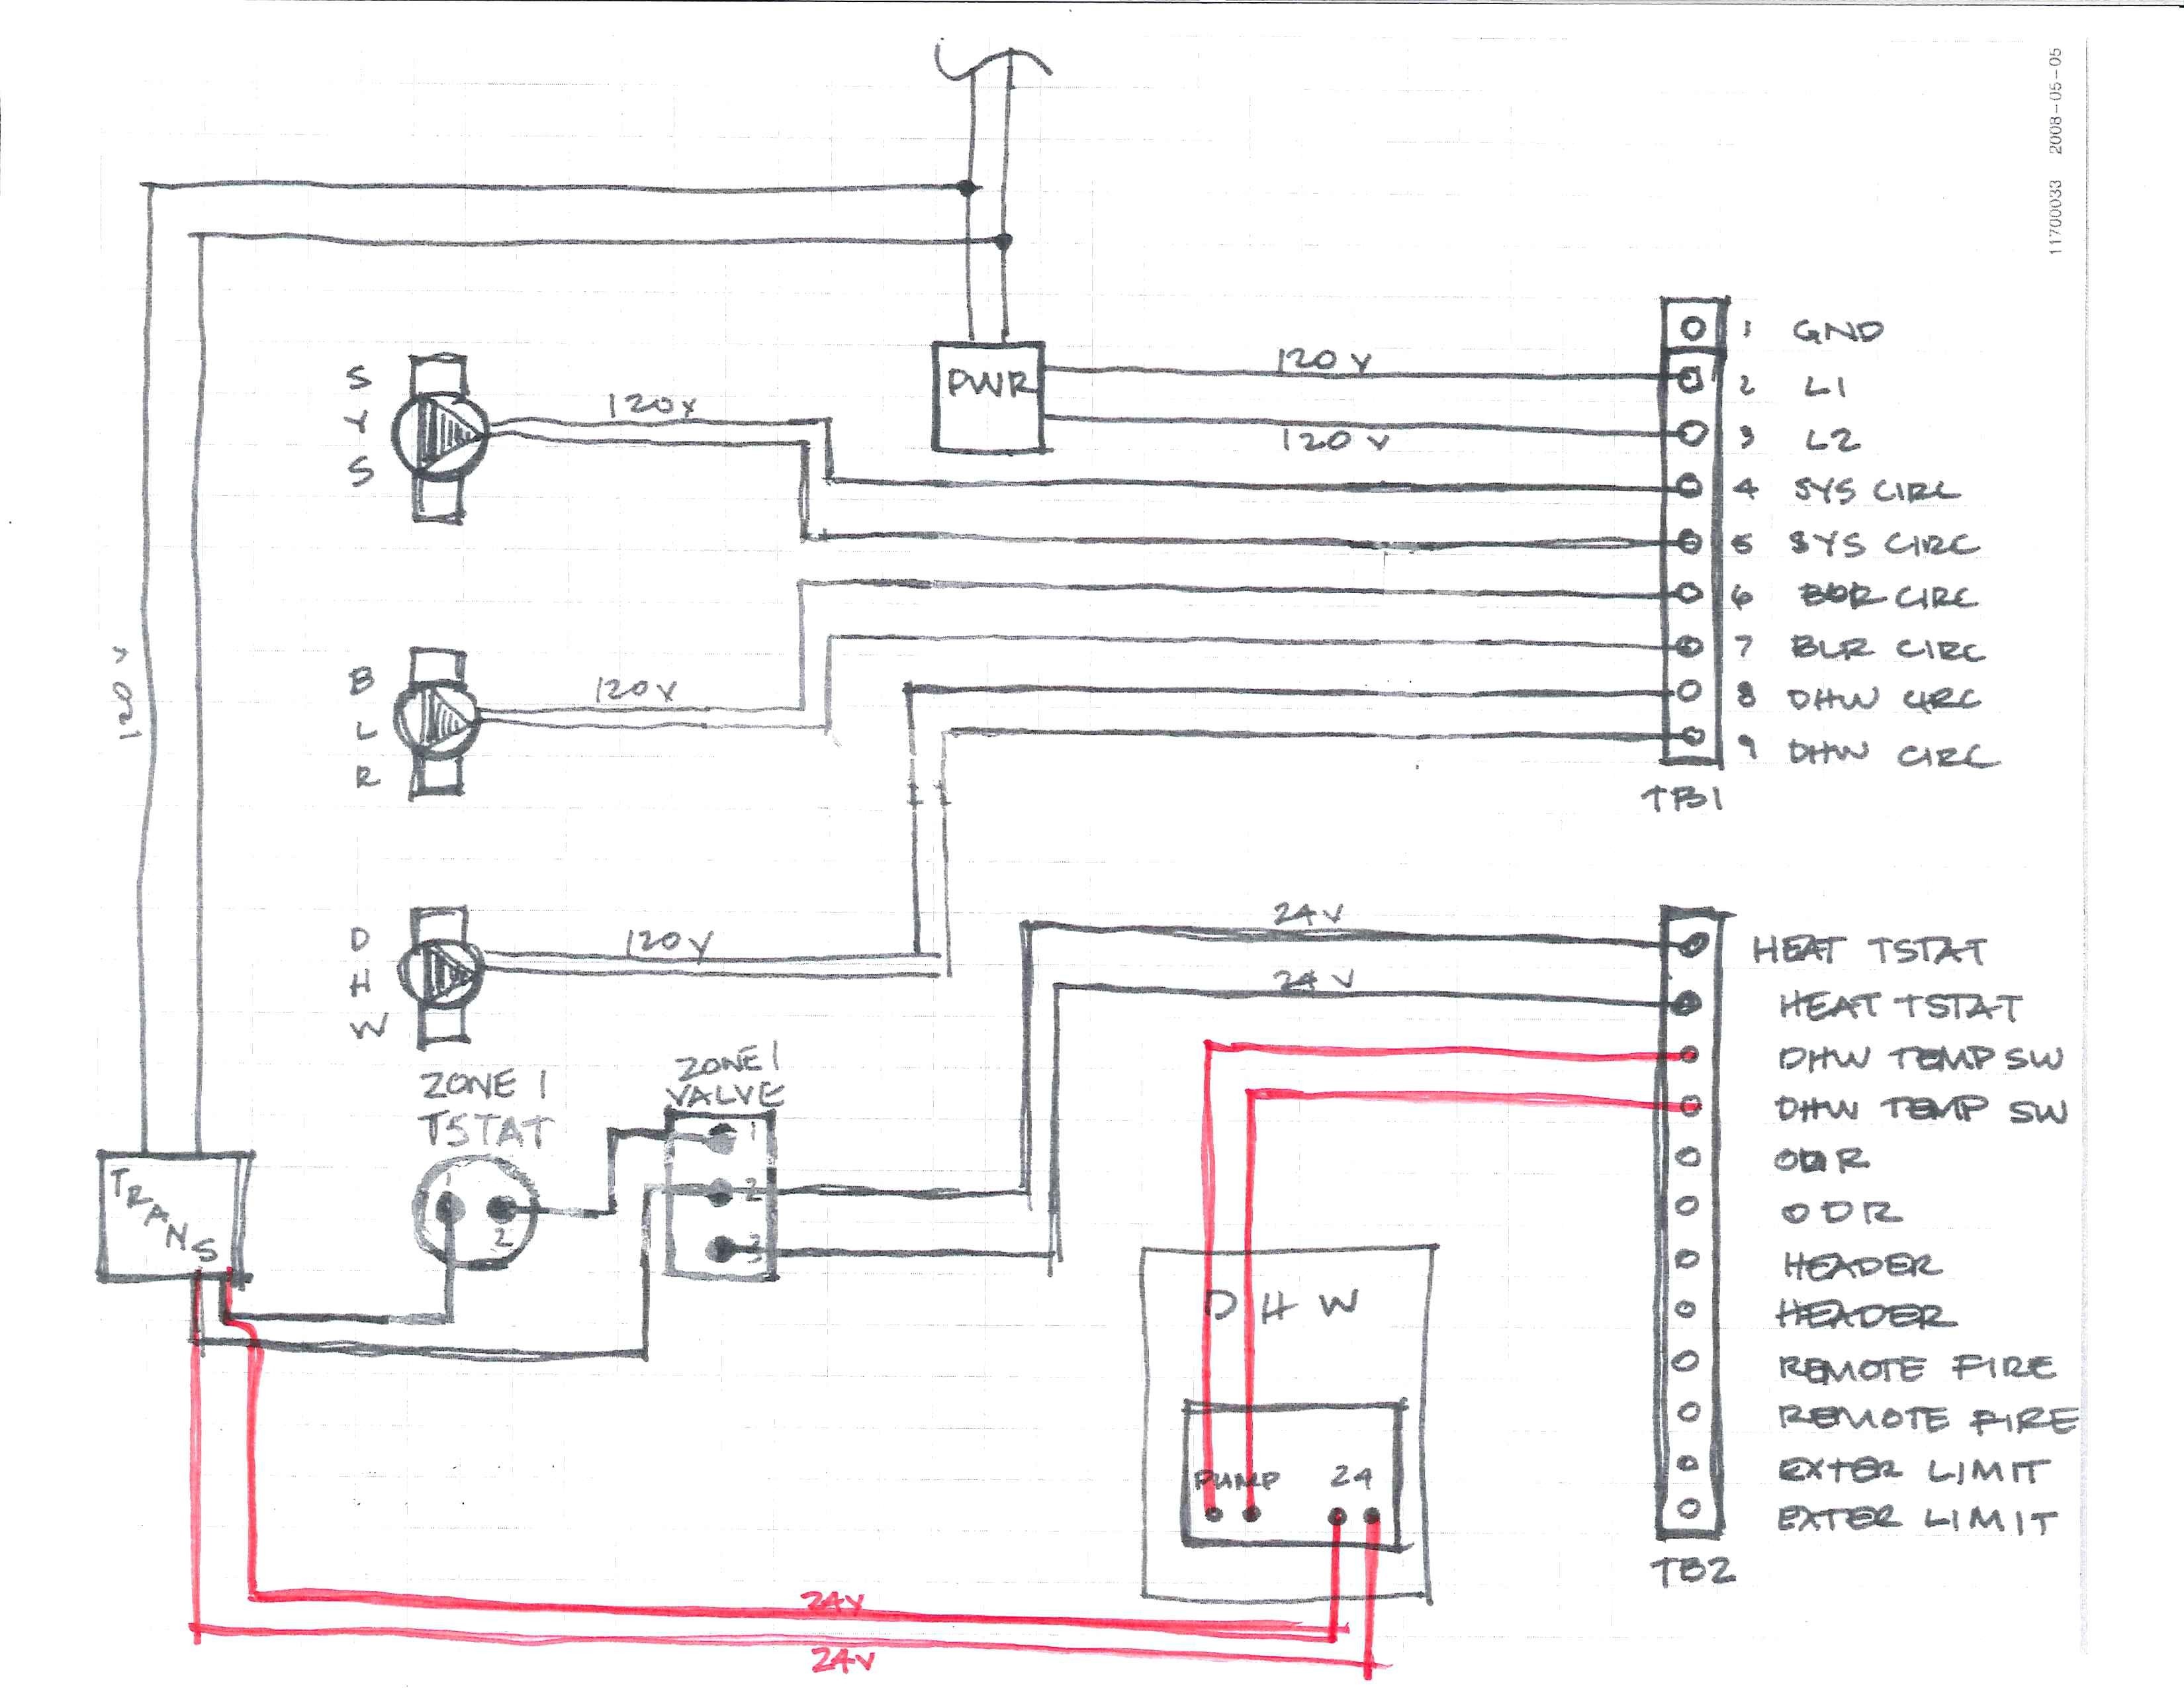 Wiring Diagram for Burnham Boiler New Wiring Diagram for Burnham Boiler New Wiring Alliance Indirect to